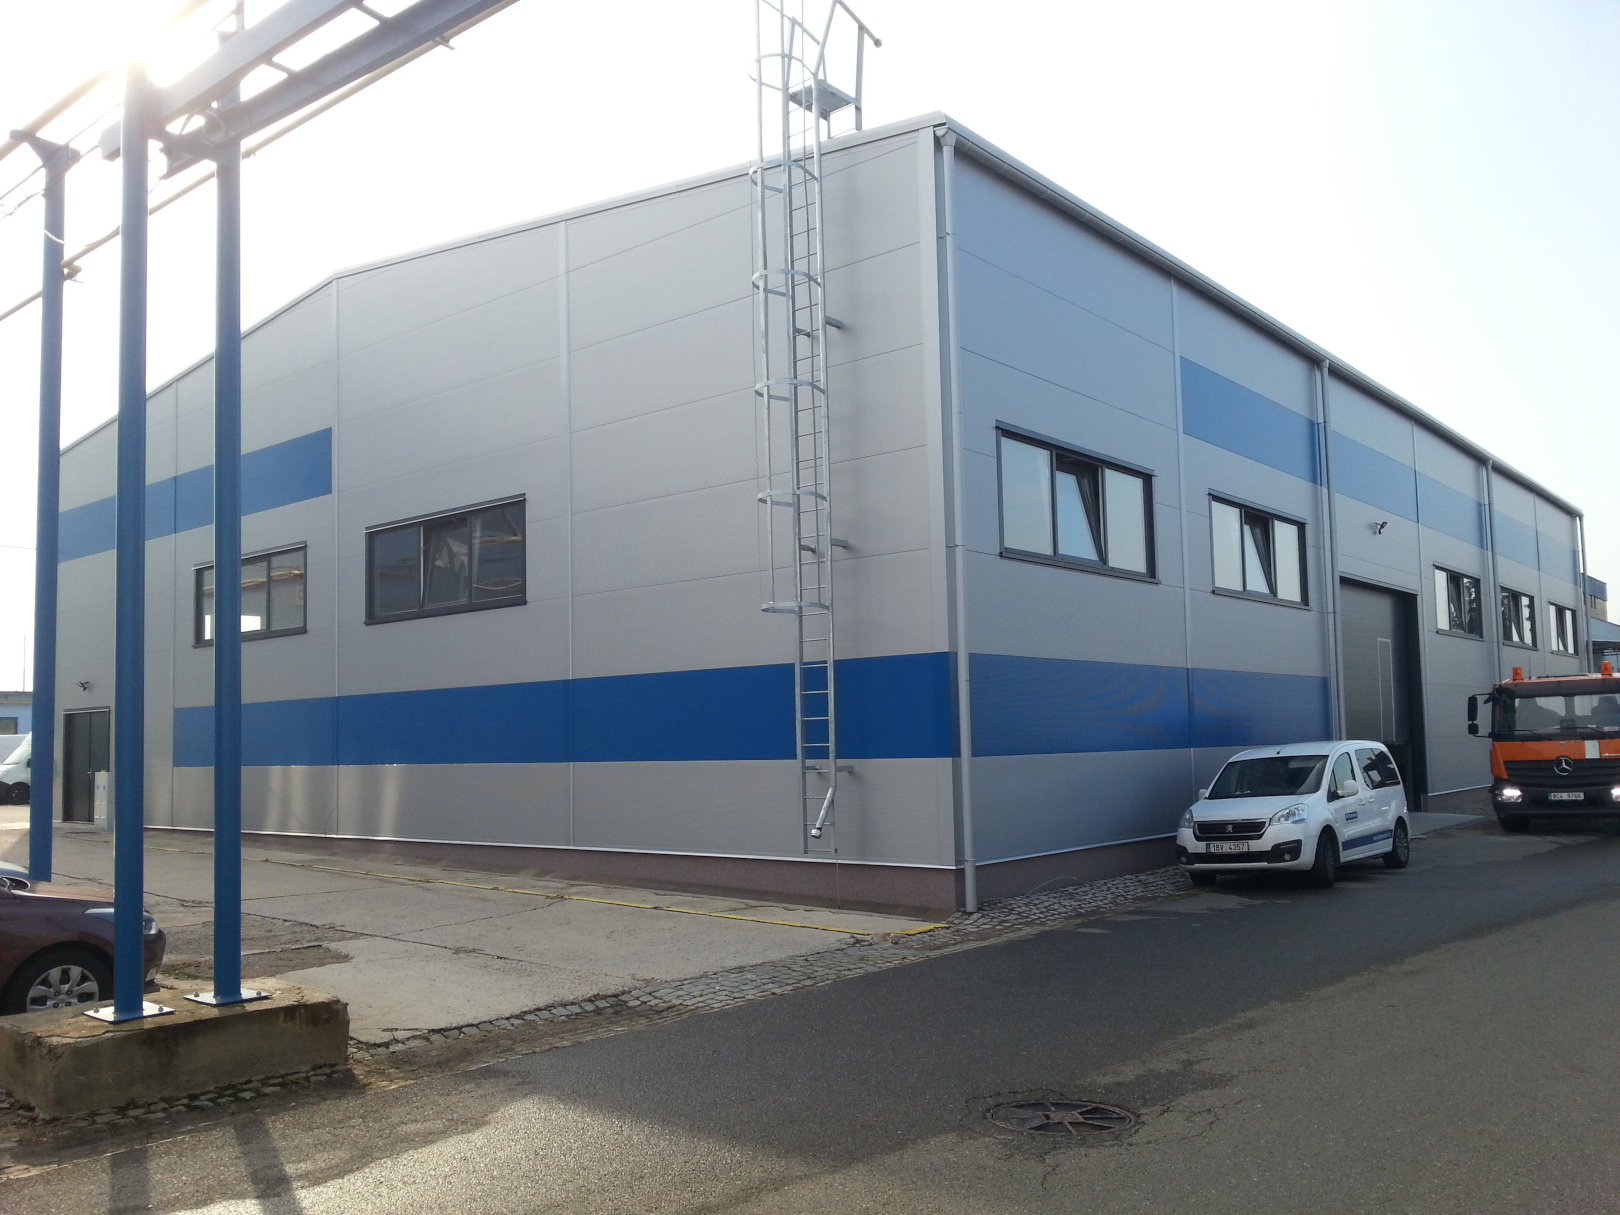 Výrobně-skladovací hala kovových výrobků HEIM Trade - Hochbau